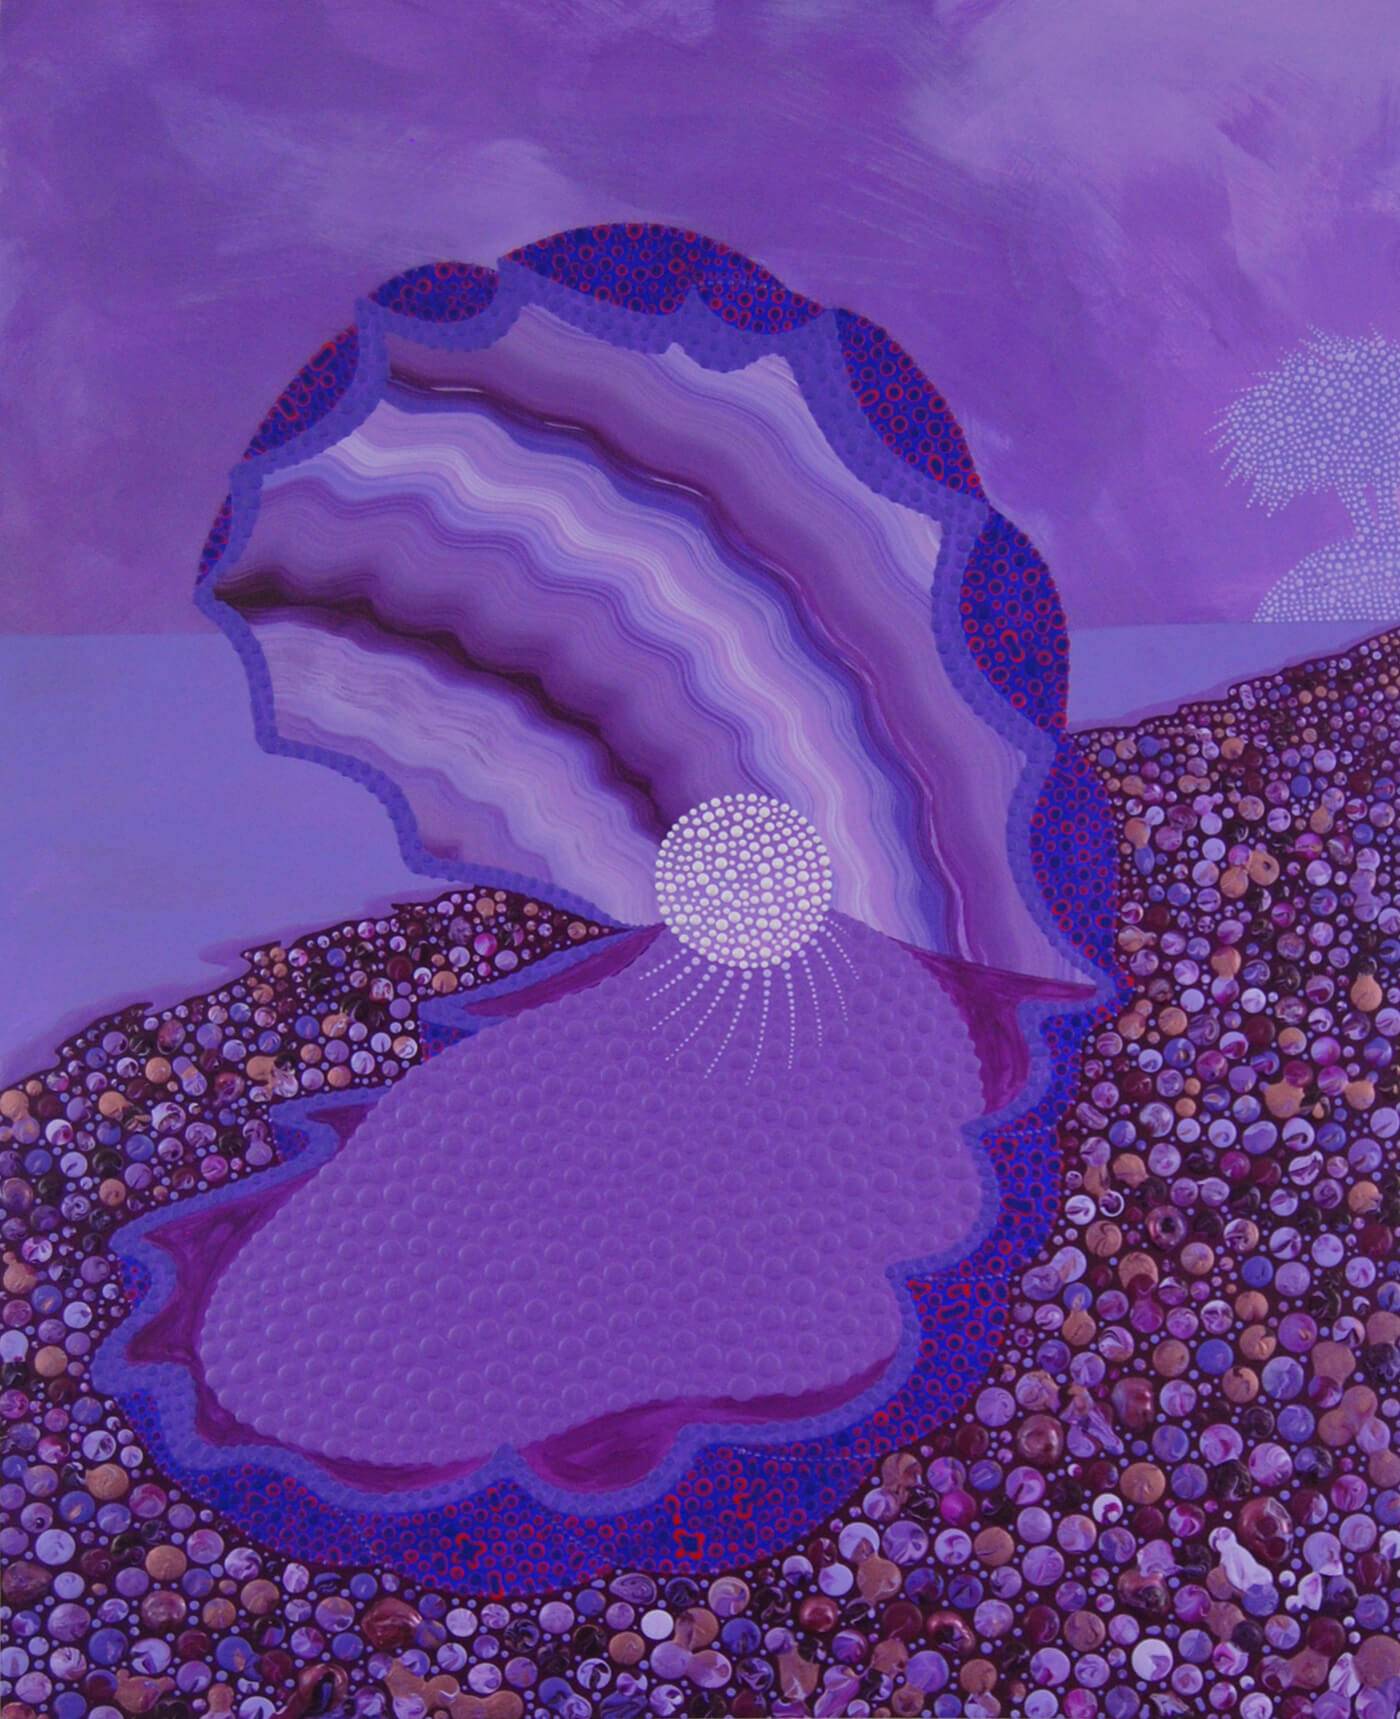 Eric Hibit Art: Purple Cloudy Oyster